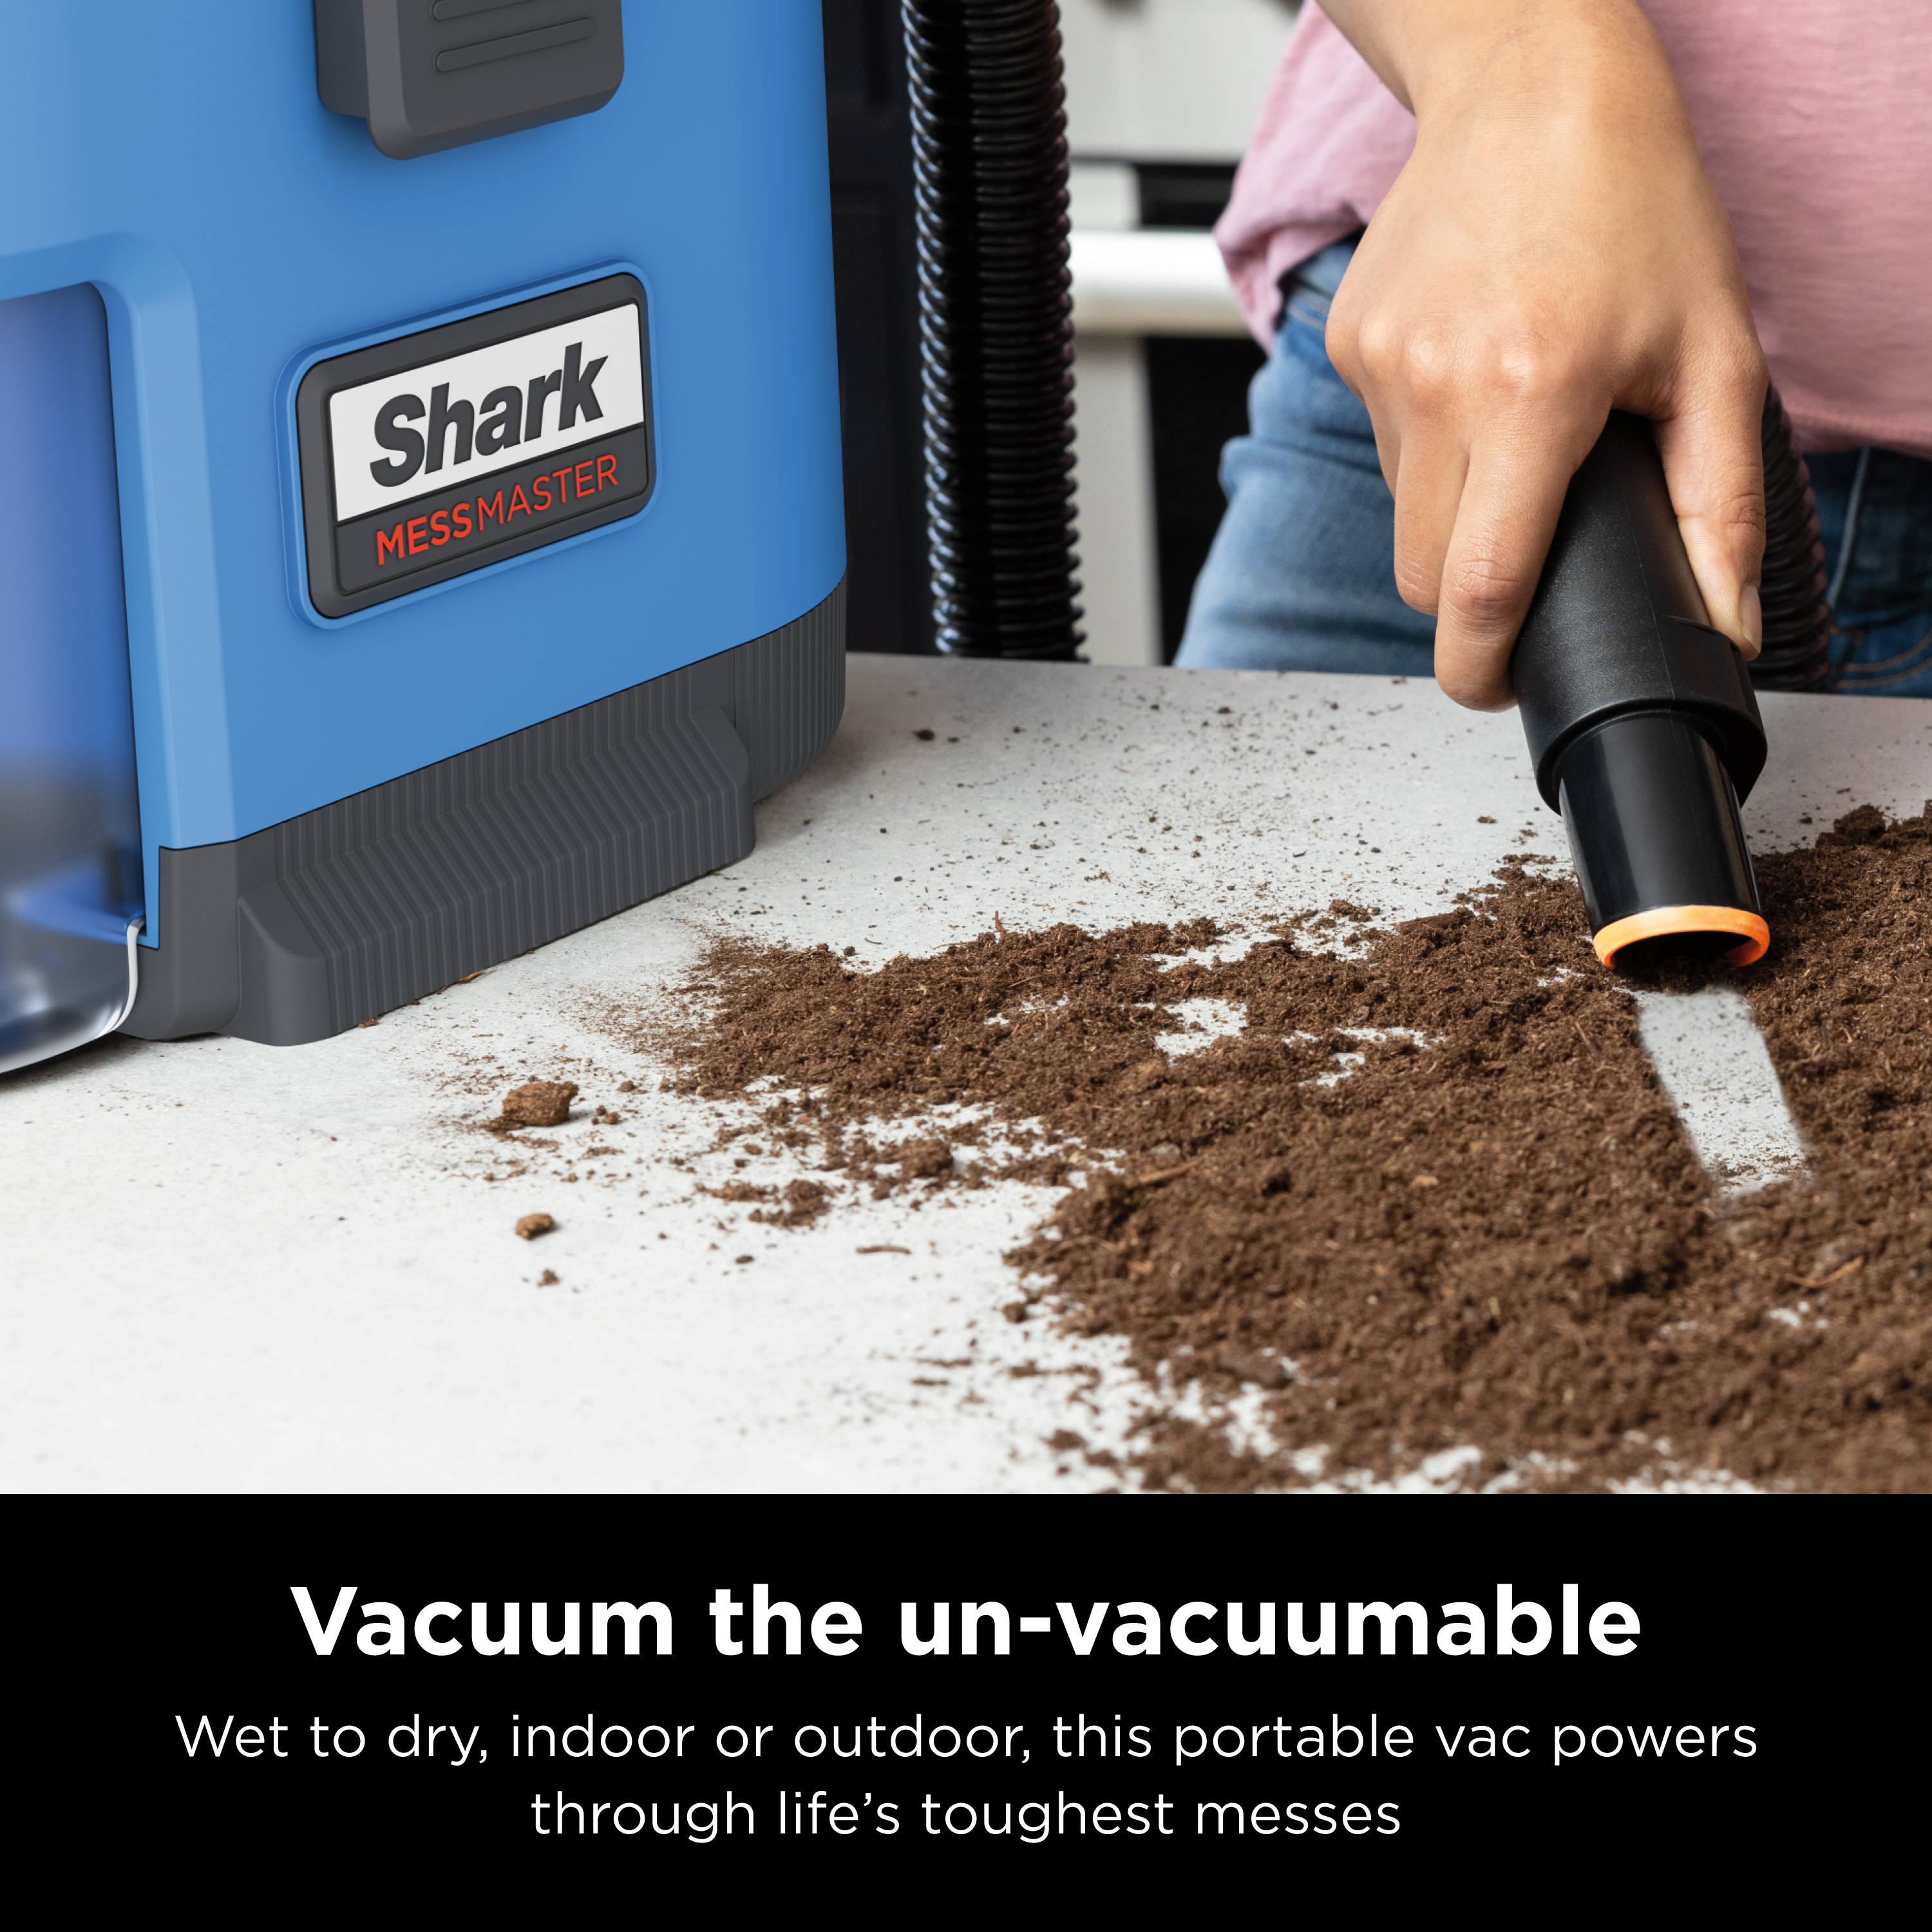 Shark MessMaster Portable Wet Dry Vacuum, Small Shop Vac, 1 Gallon Capacity, Corded, Handheld, VS100 - image 5 of 12